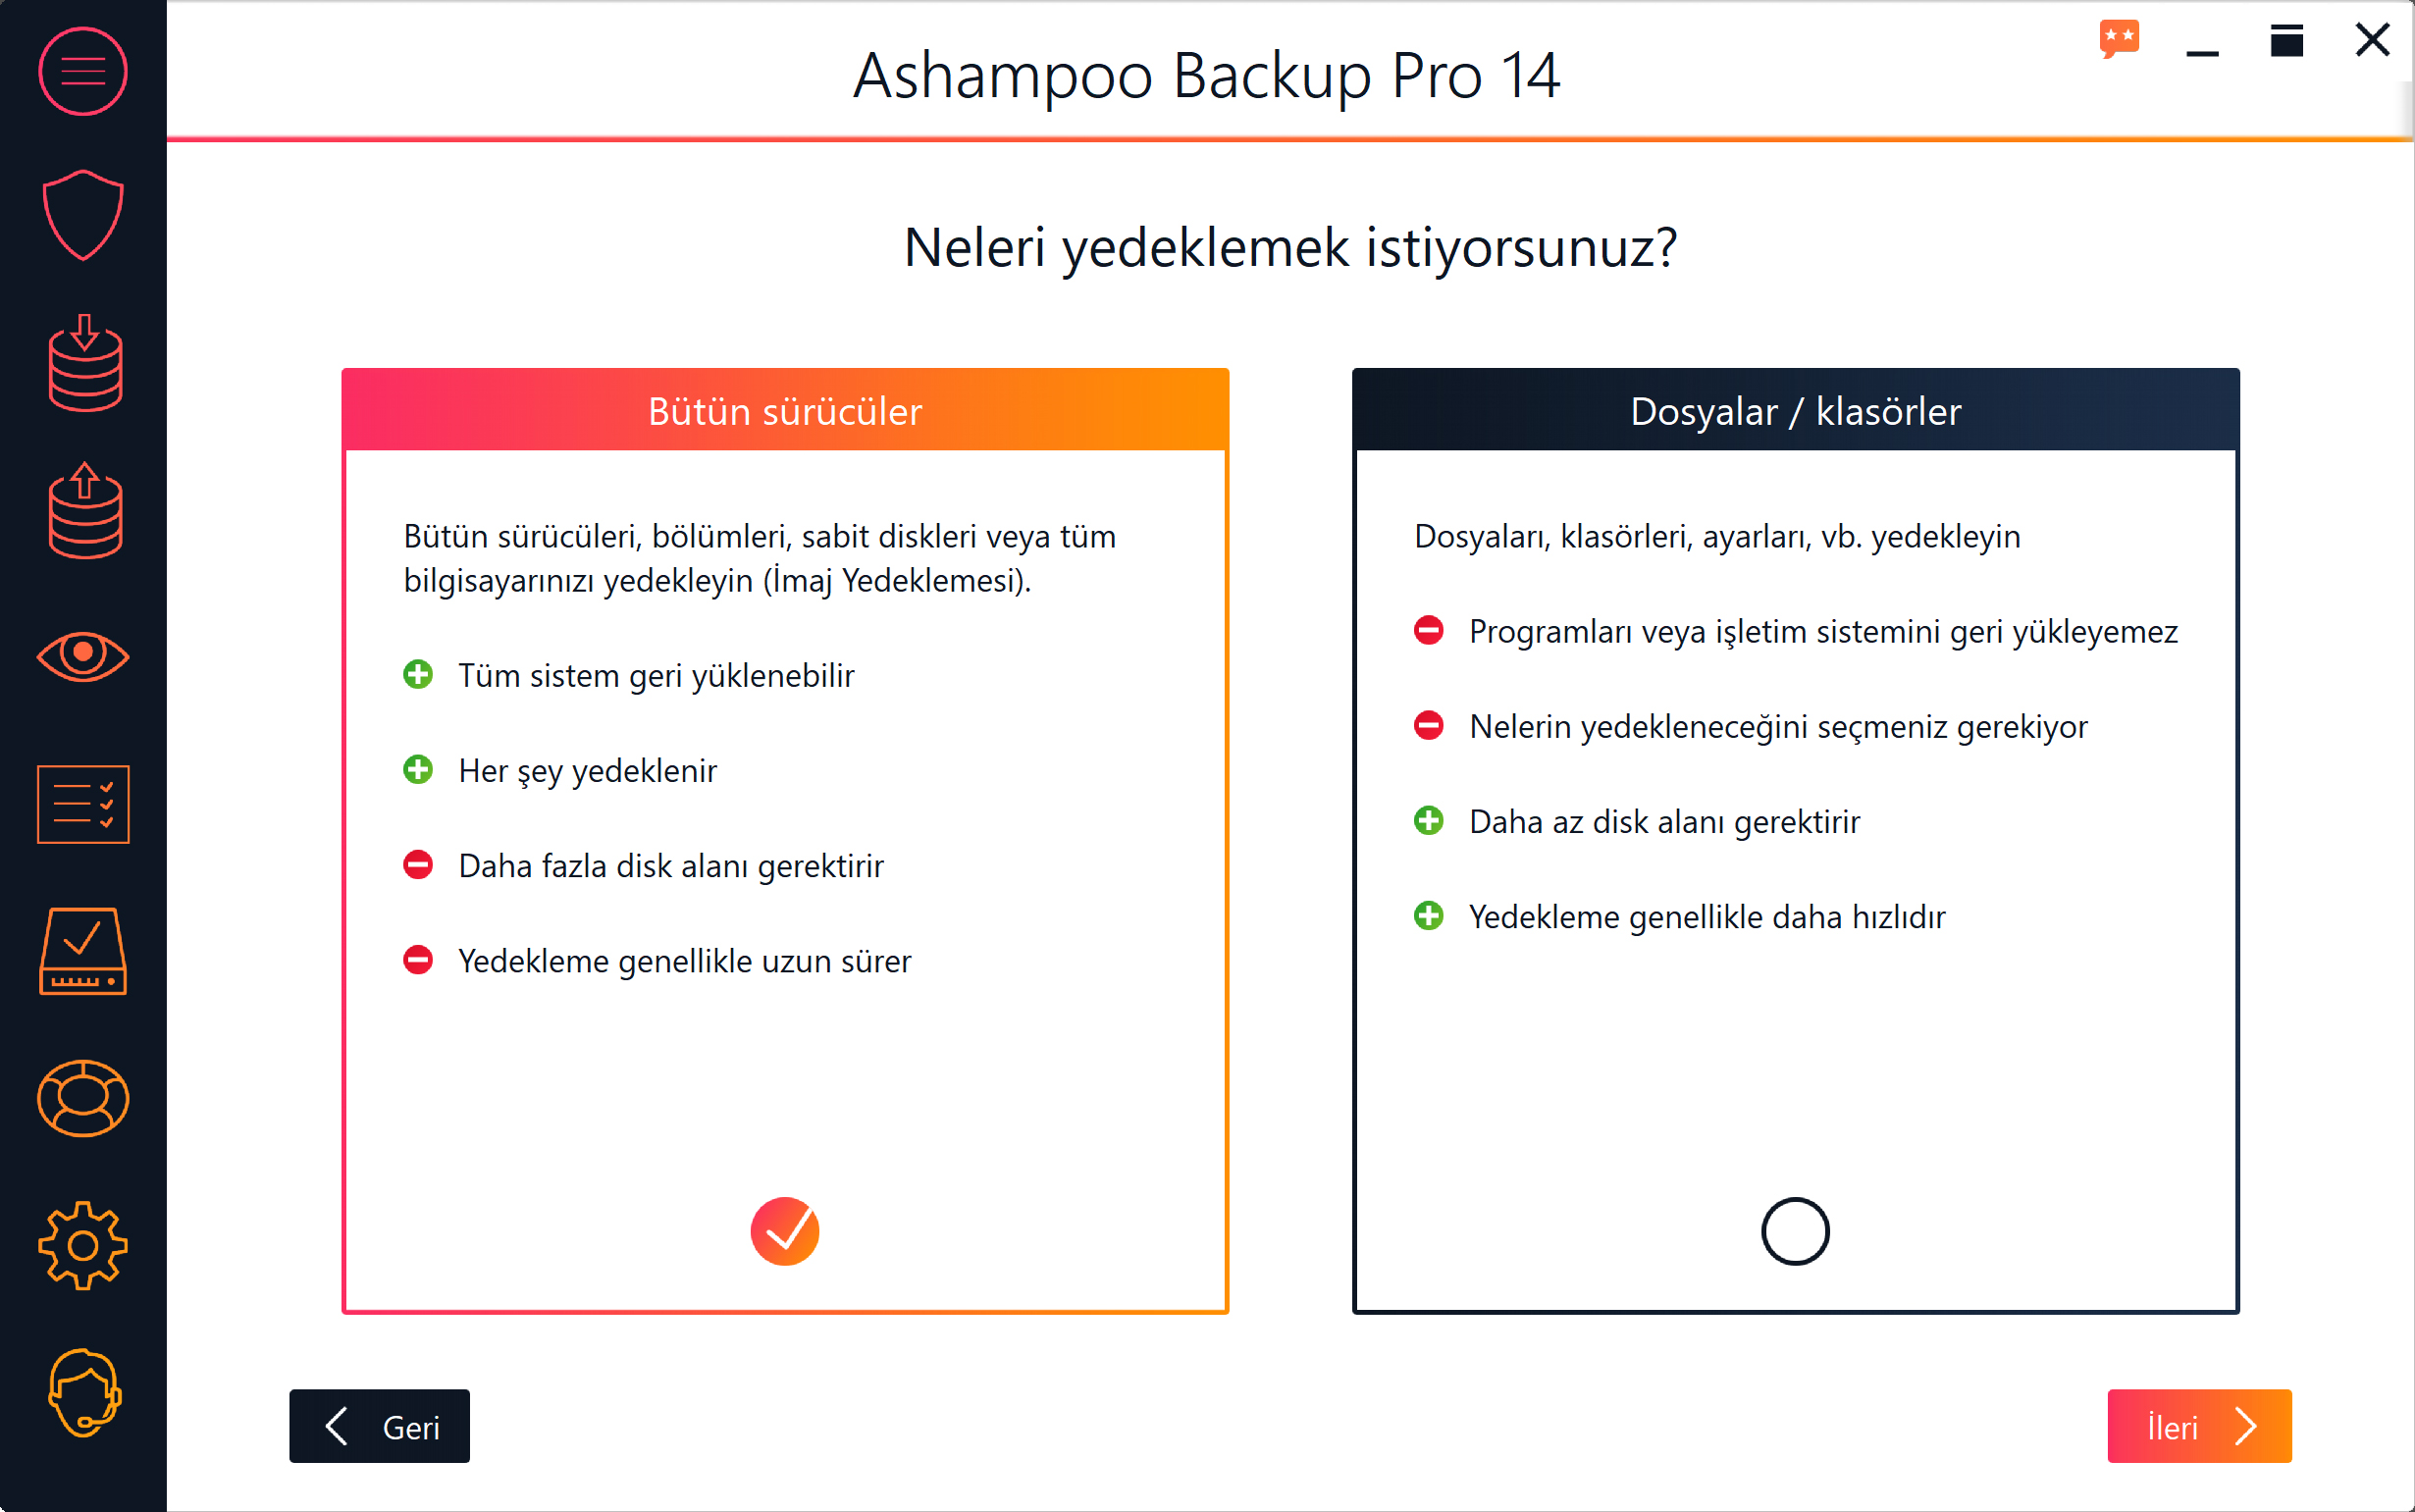 Ashampoo Backup Pro 17.06 for ios download free